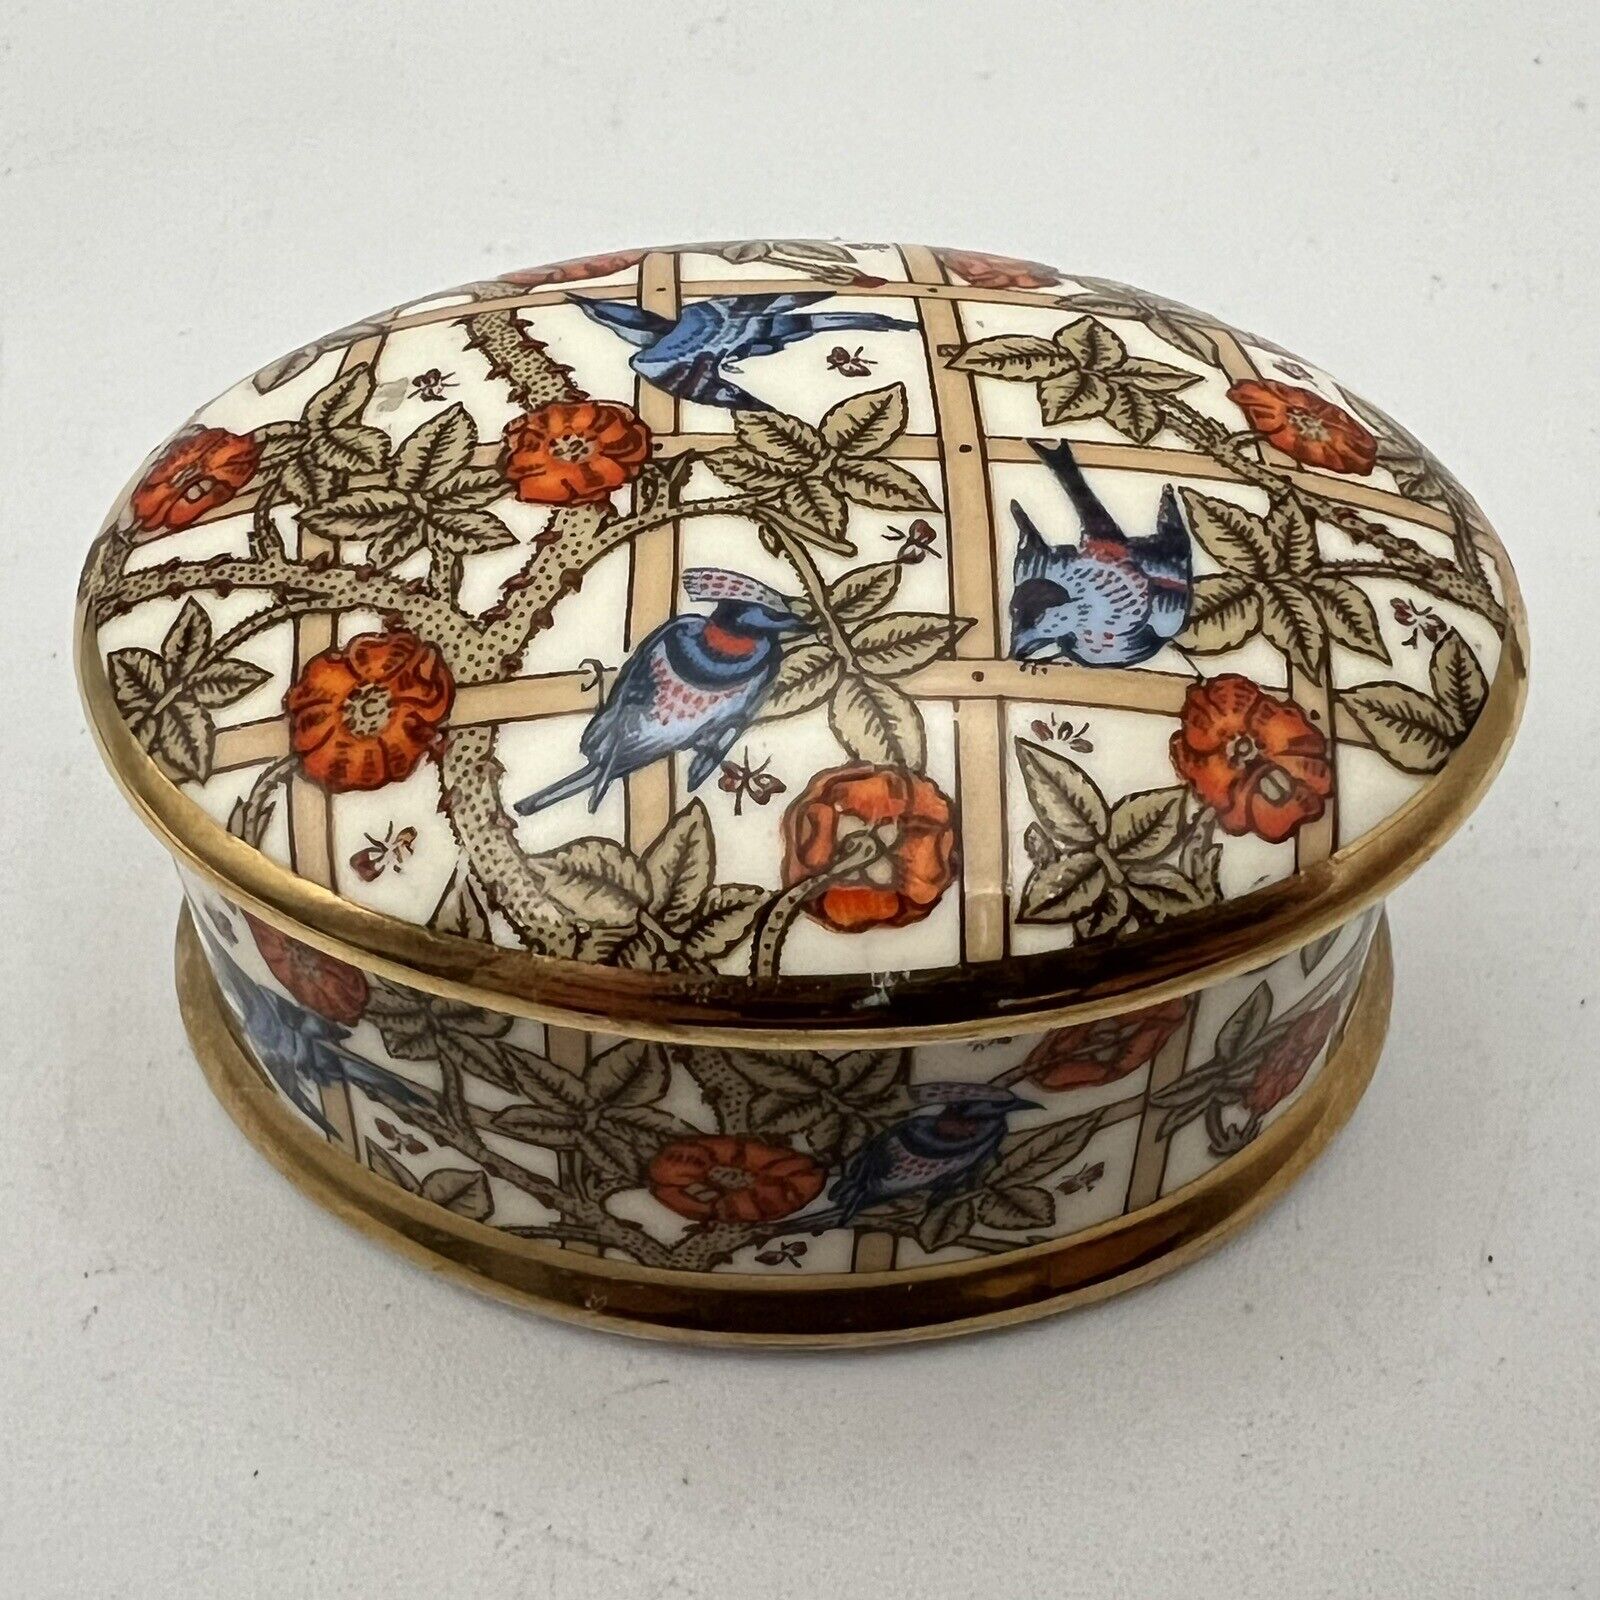 Ayshford Fine Bone China Staffordshire England “Trellis” Trinket Box